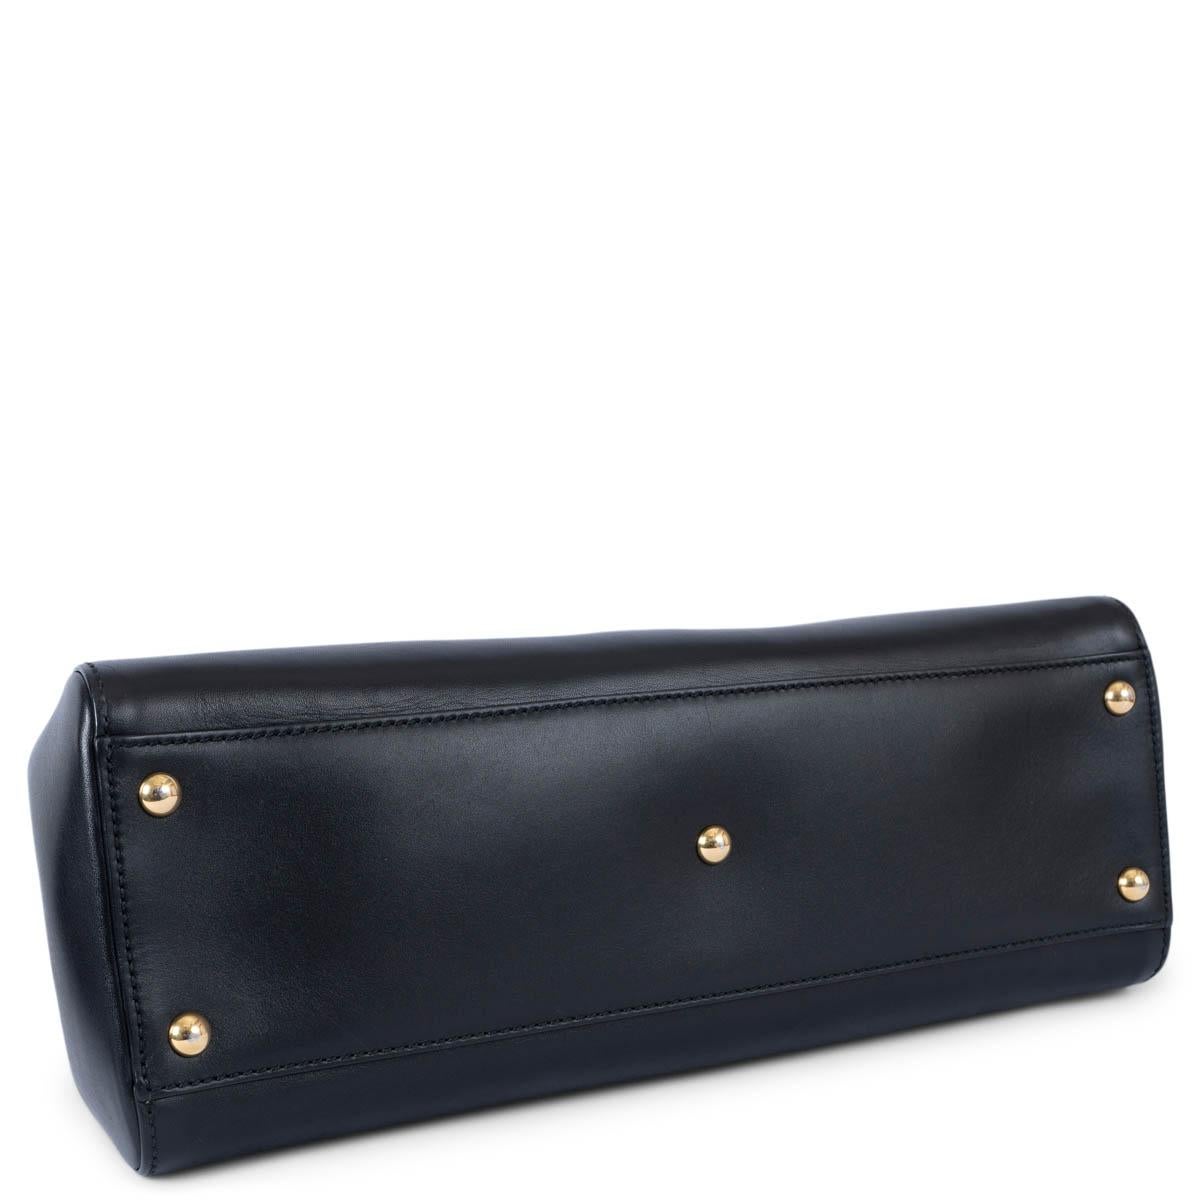 Women's GUCCI black leather SYLVIE LARGE TOTE Shoulder Bag For Sale